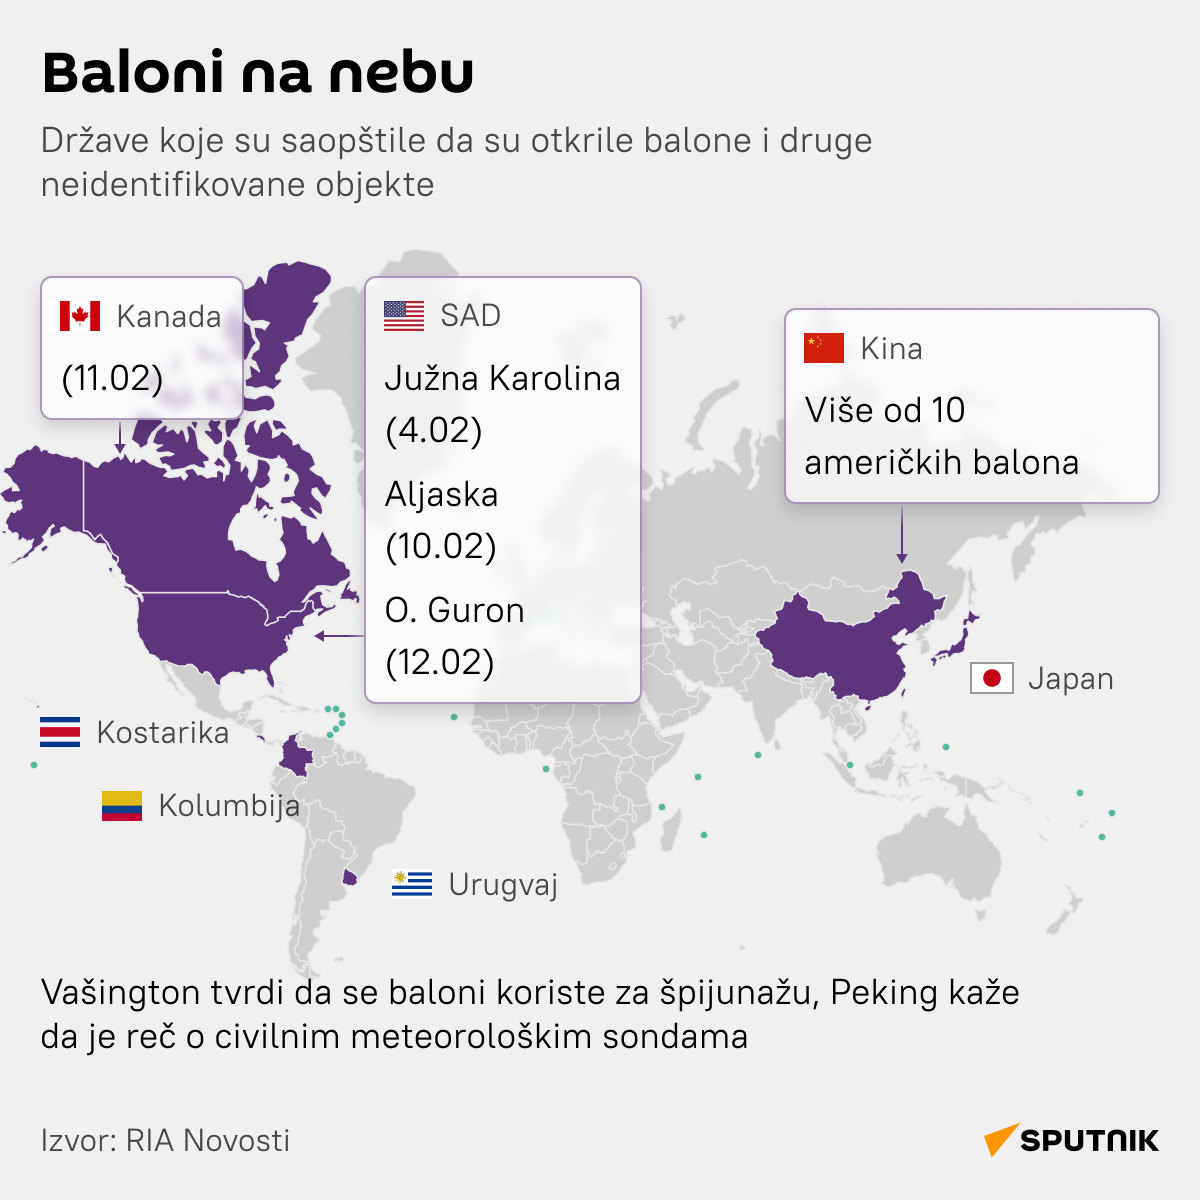 Infografika Baloni na nebu  LATINICA desk - Sputnik Srbija